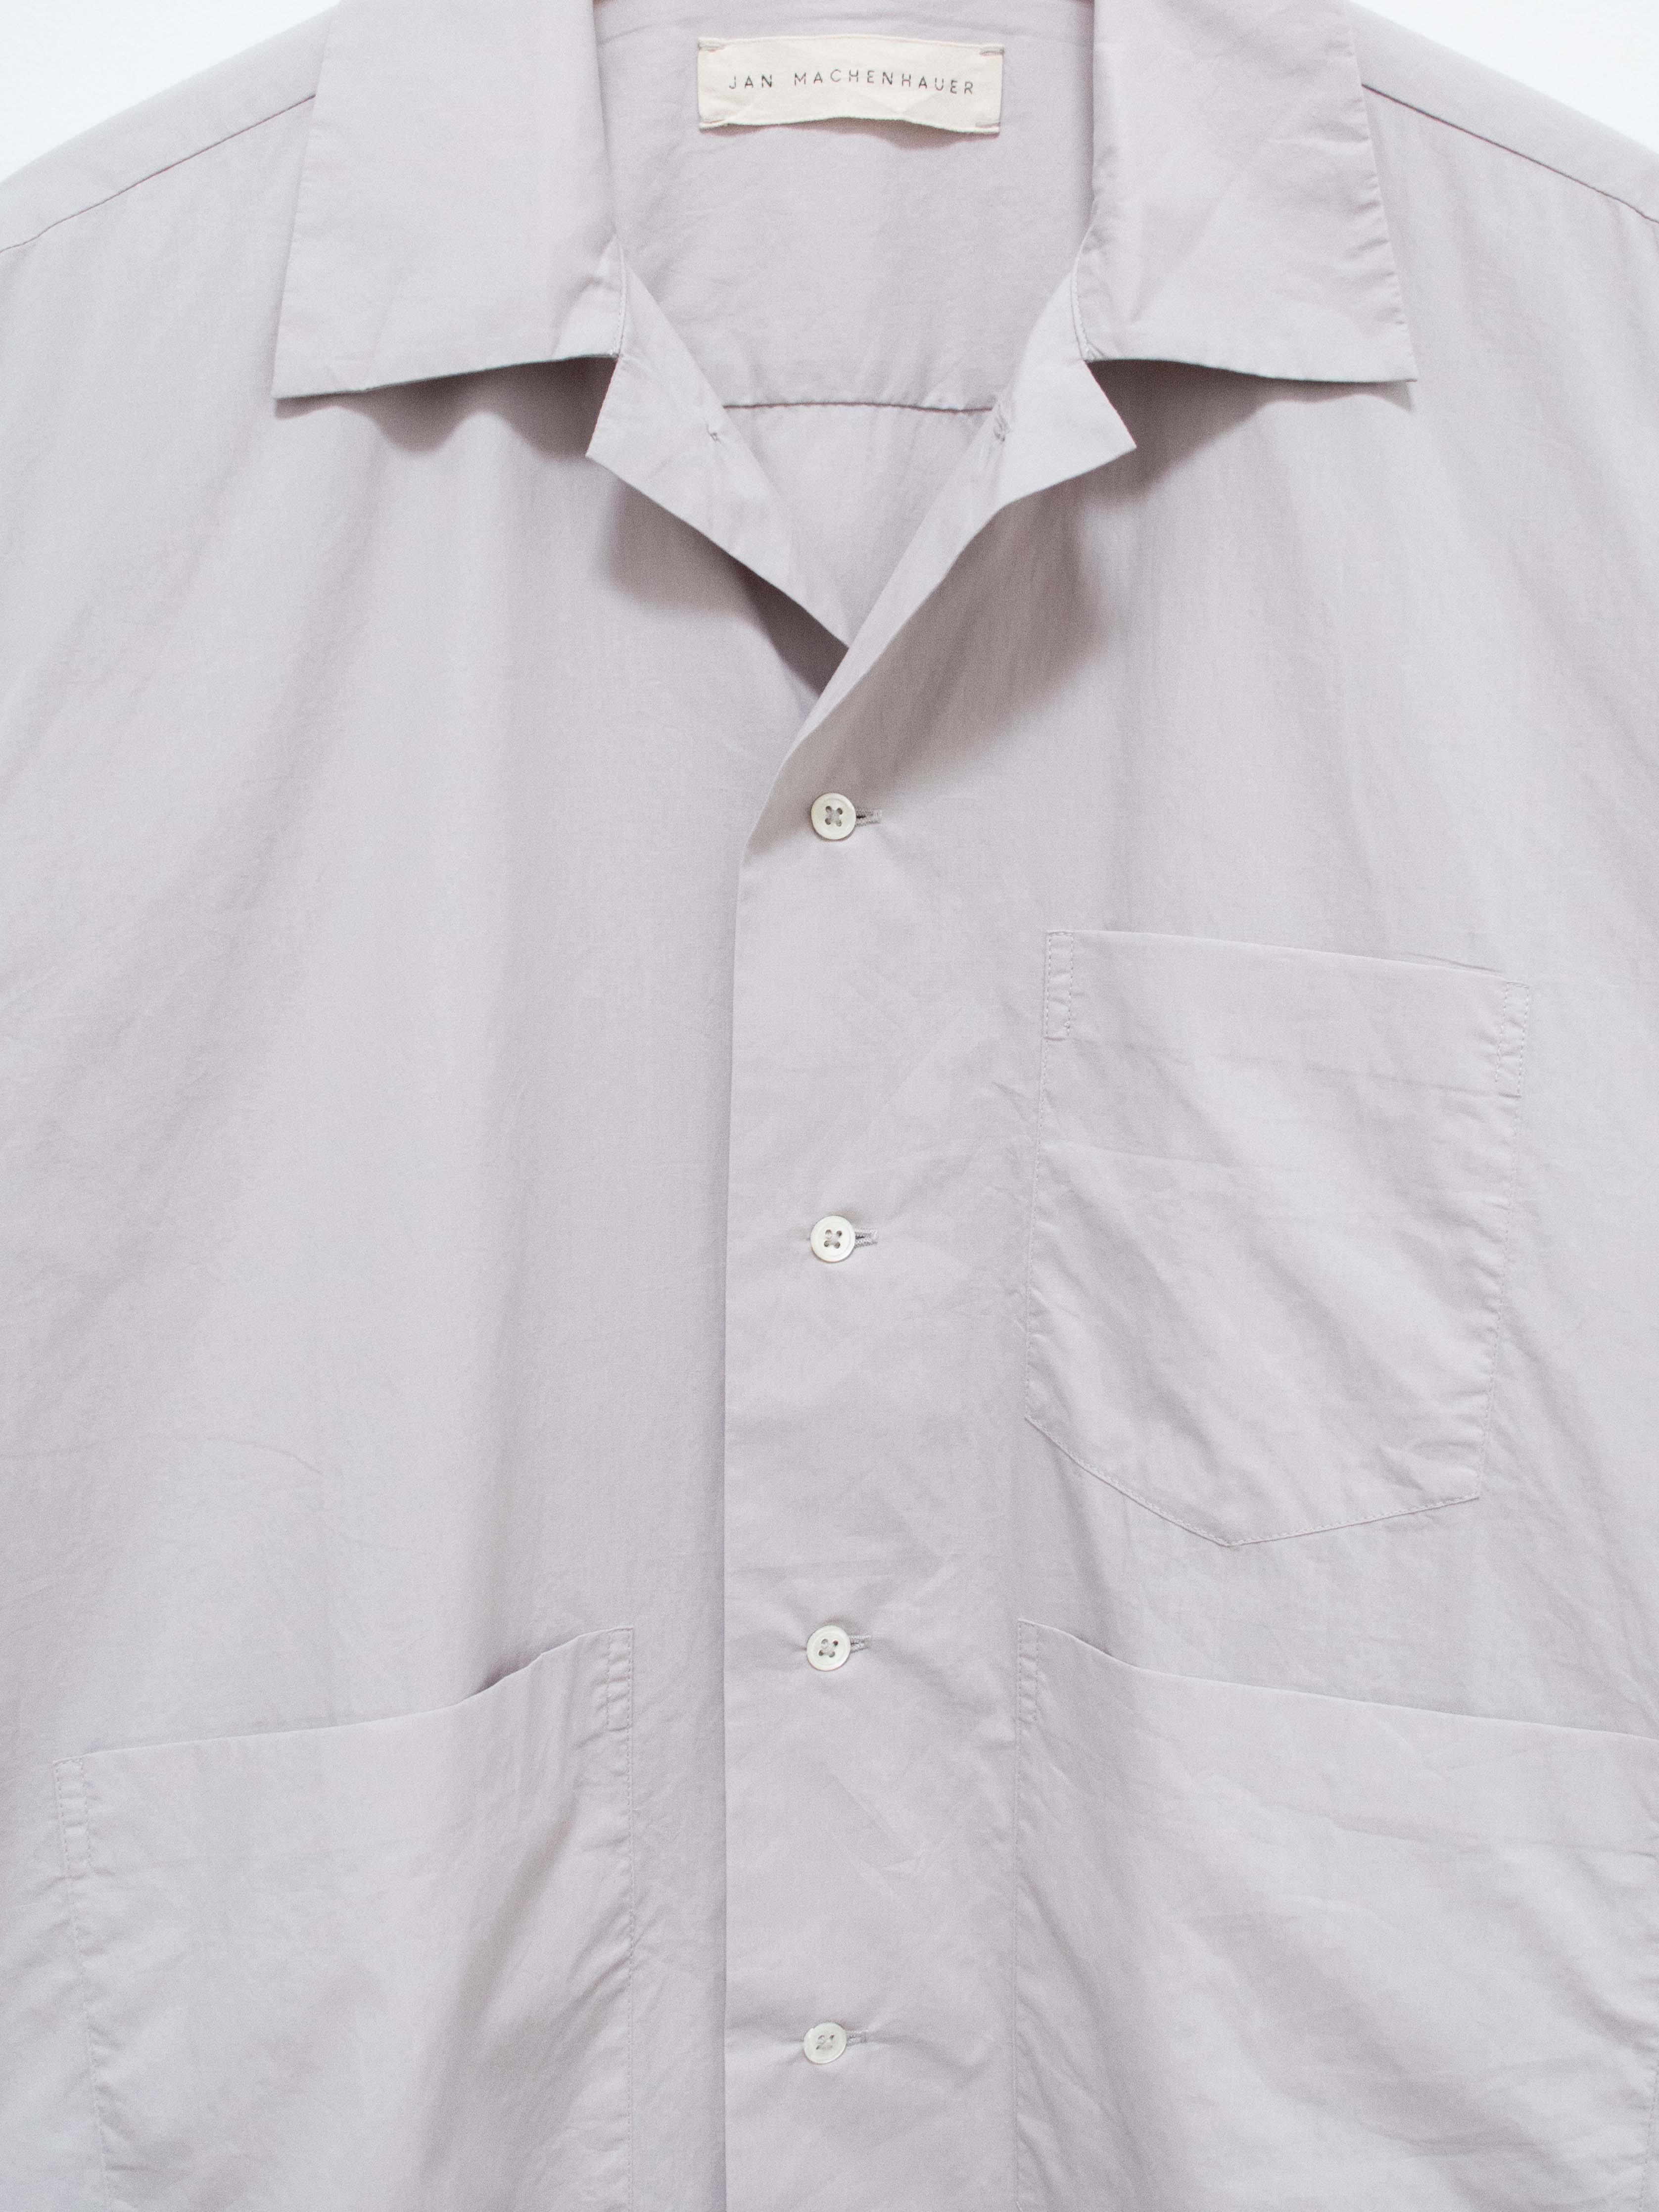 Namu Shop - Jan Machenhauer Frank Shirt - Pale Oak